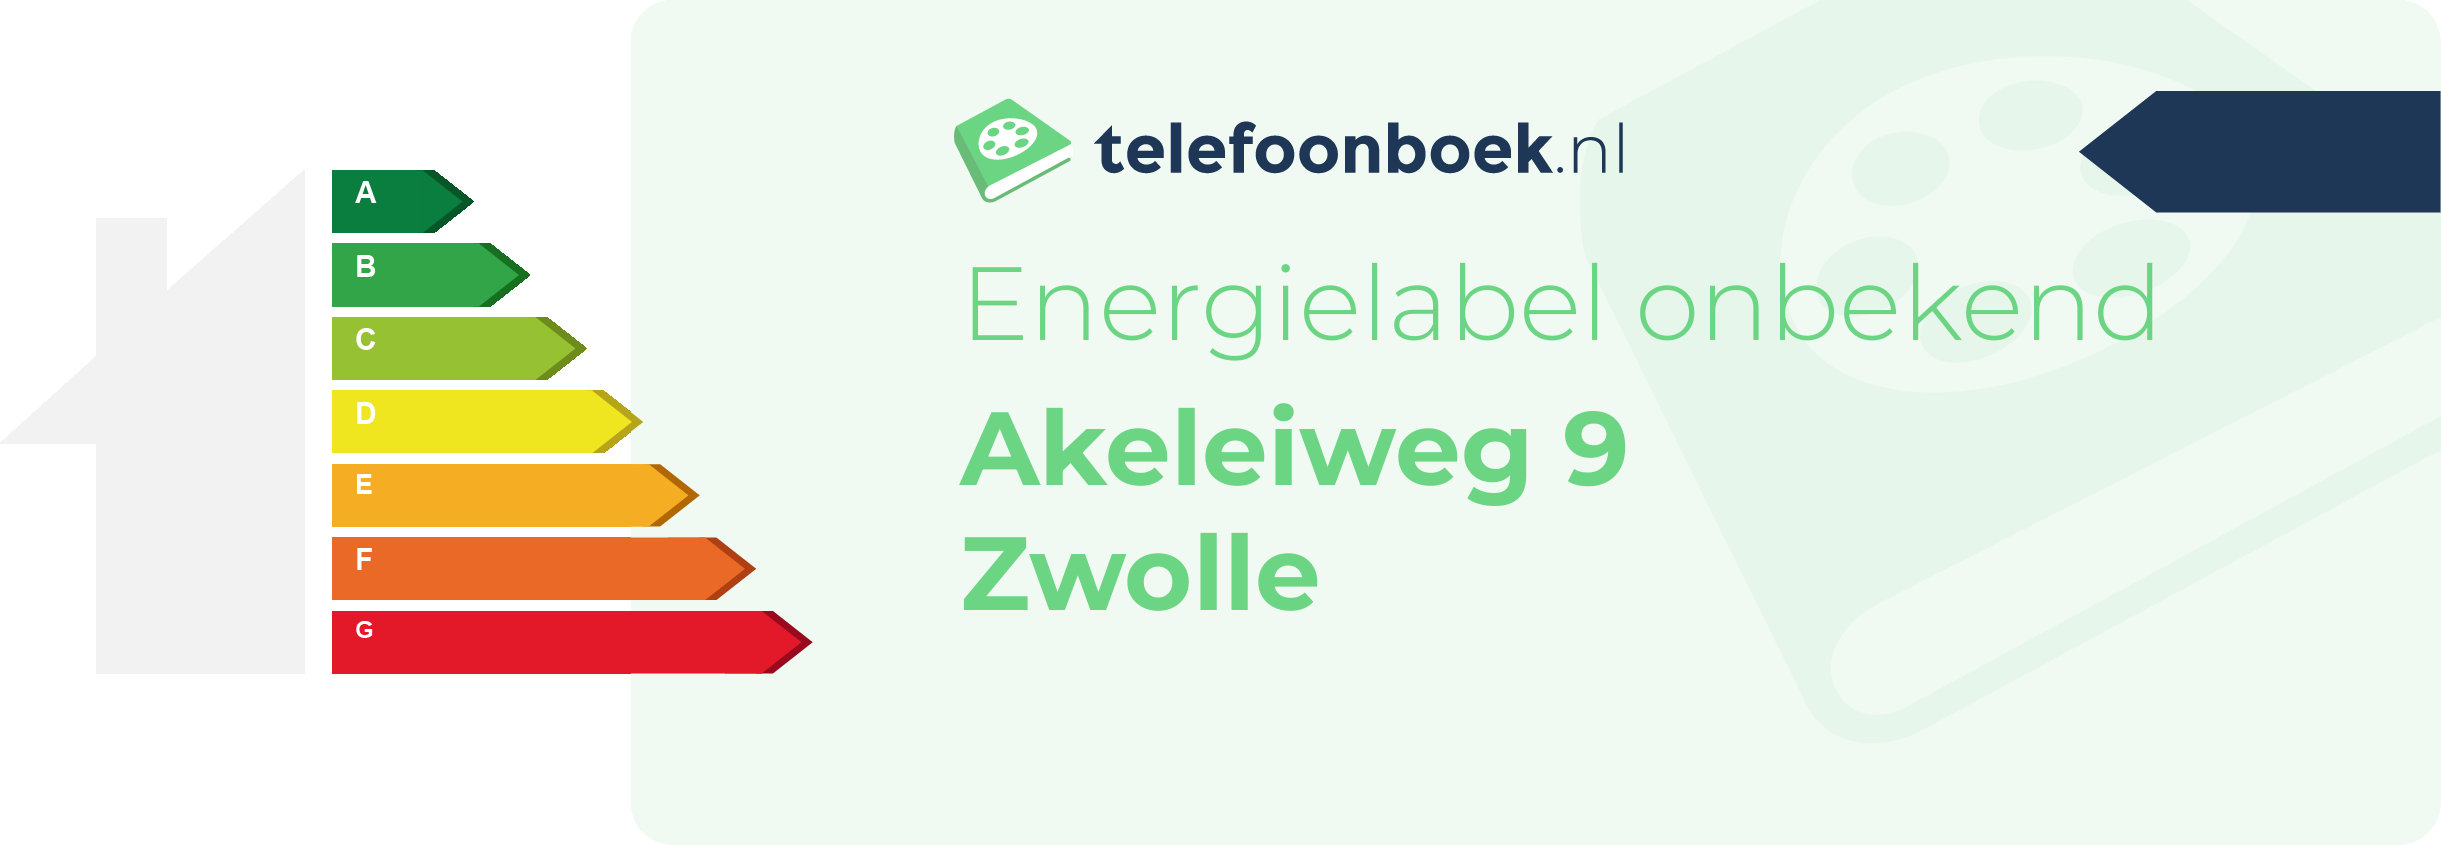 Energielabel Akeleiweg 9 Zwolle